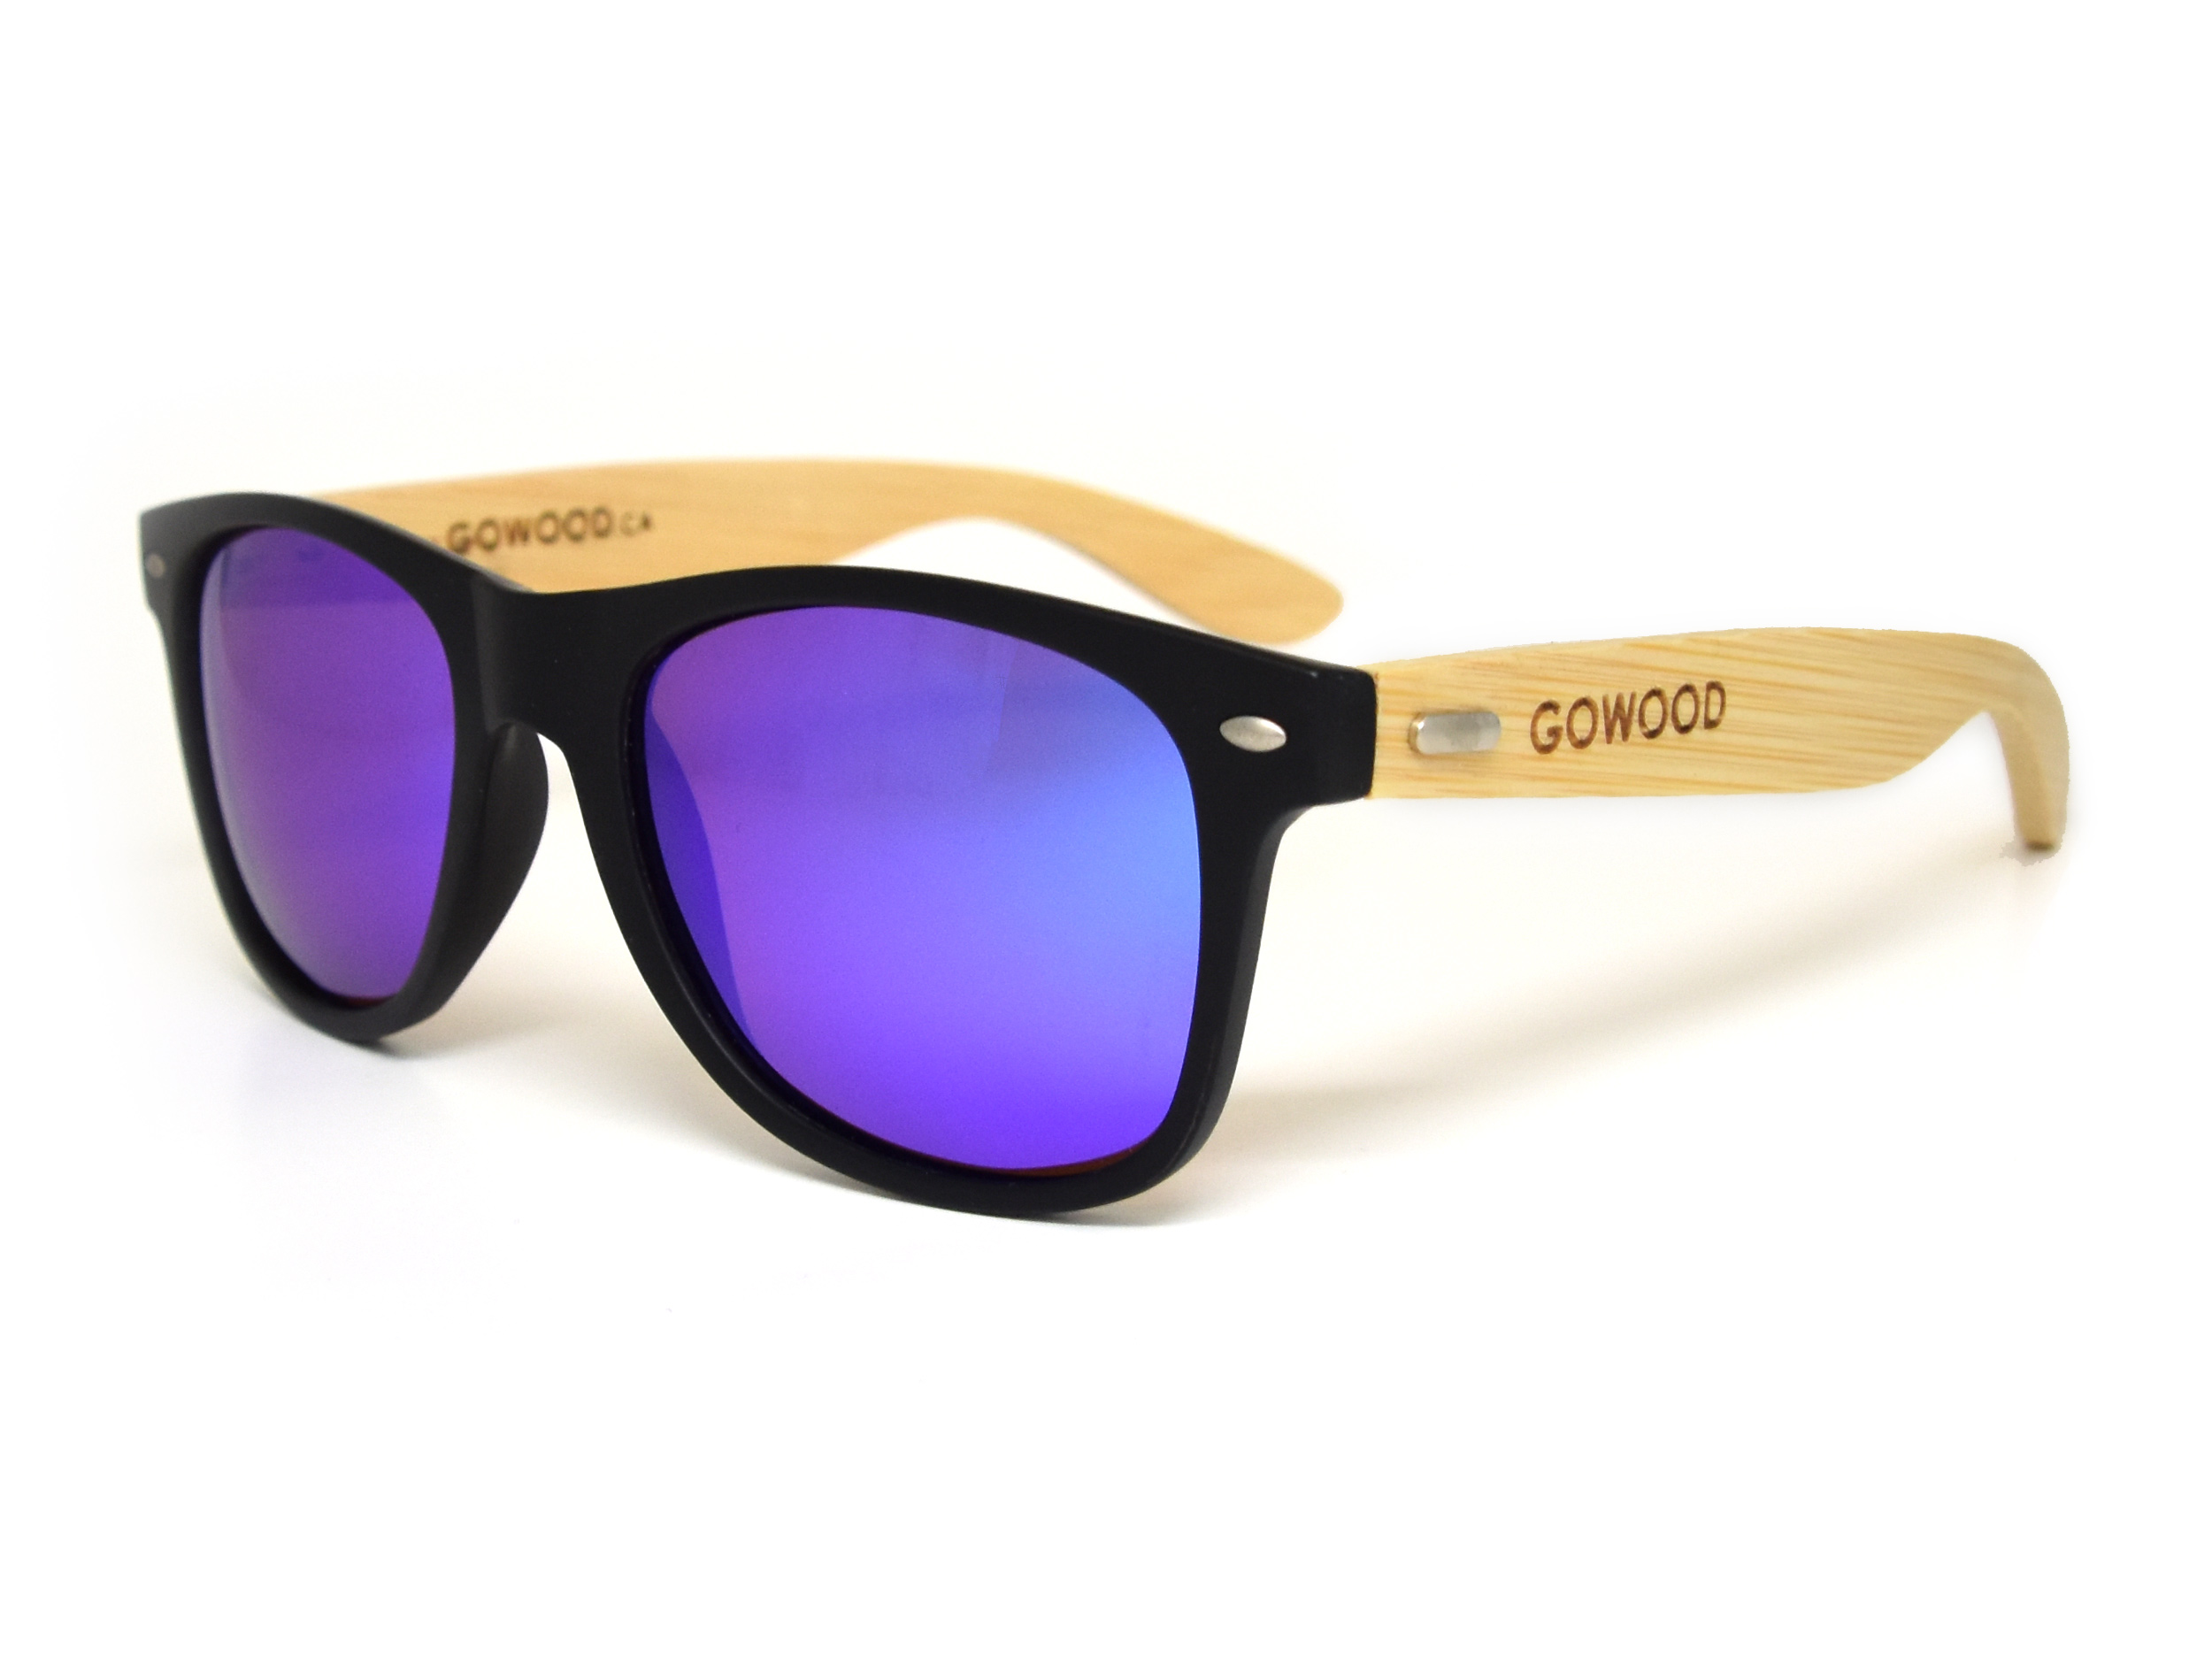 Classic wayfarer sunglasses with blue lenses angle